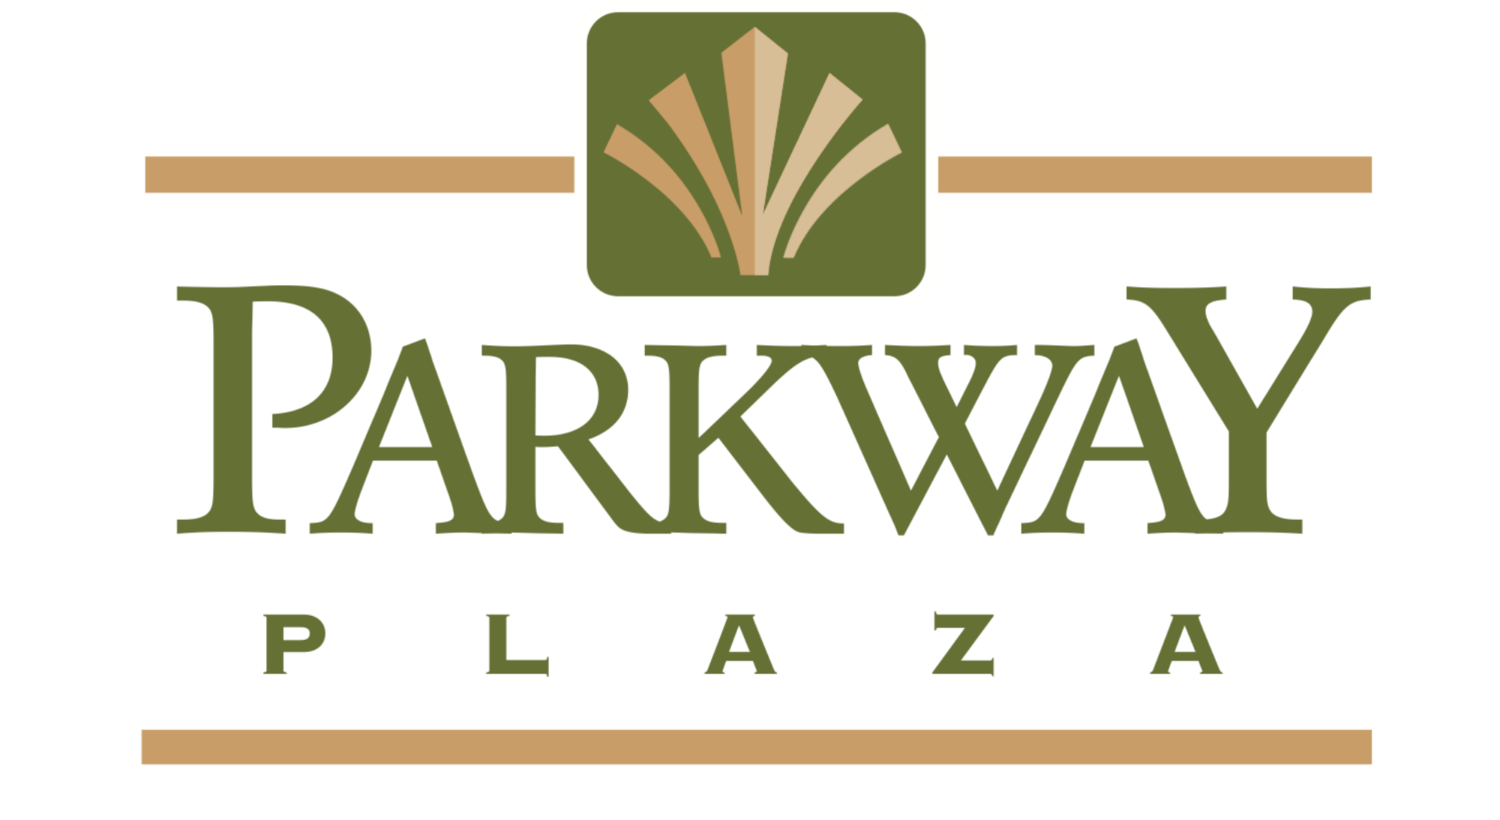 Parkway Plaza